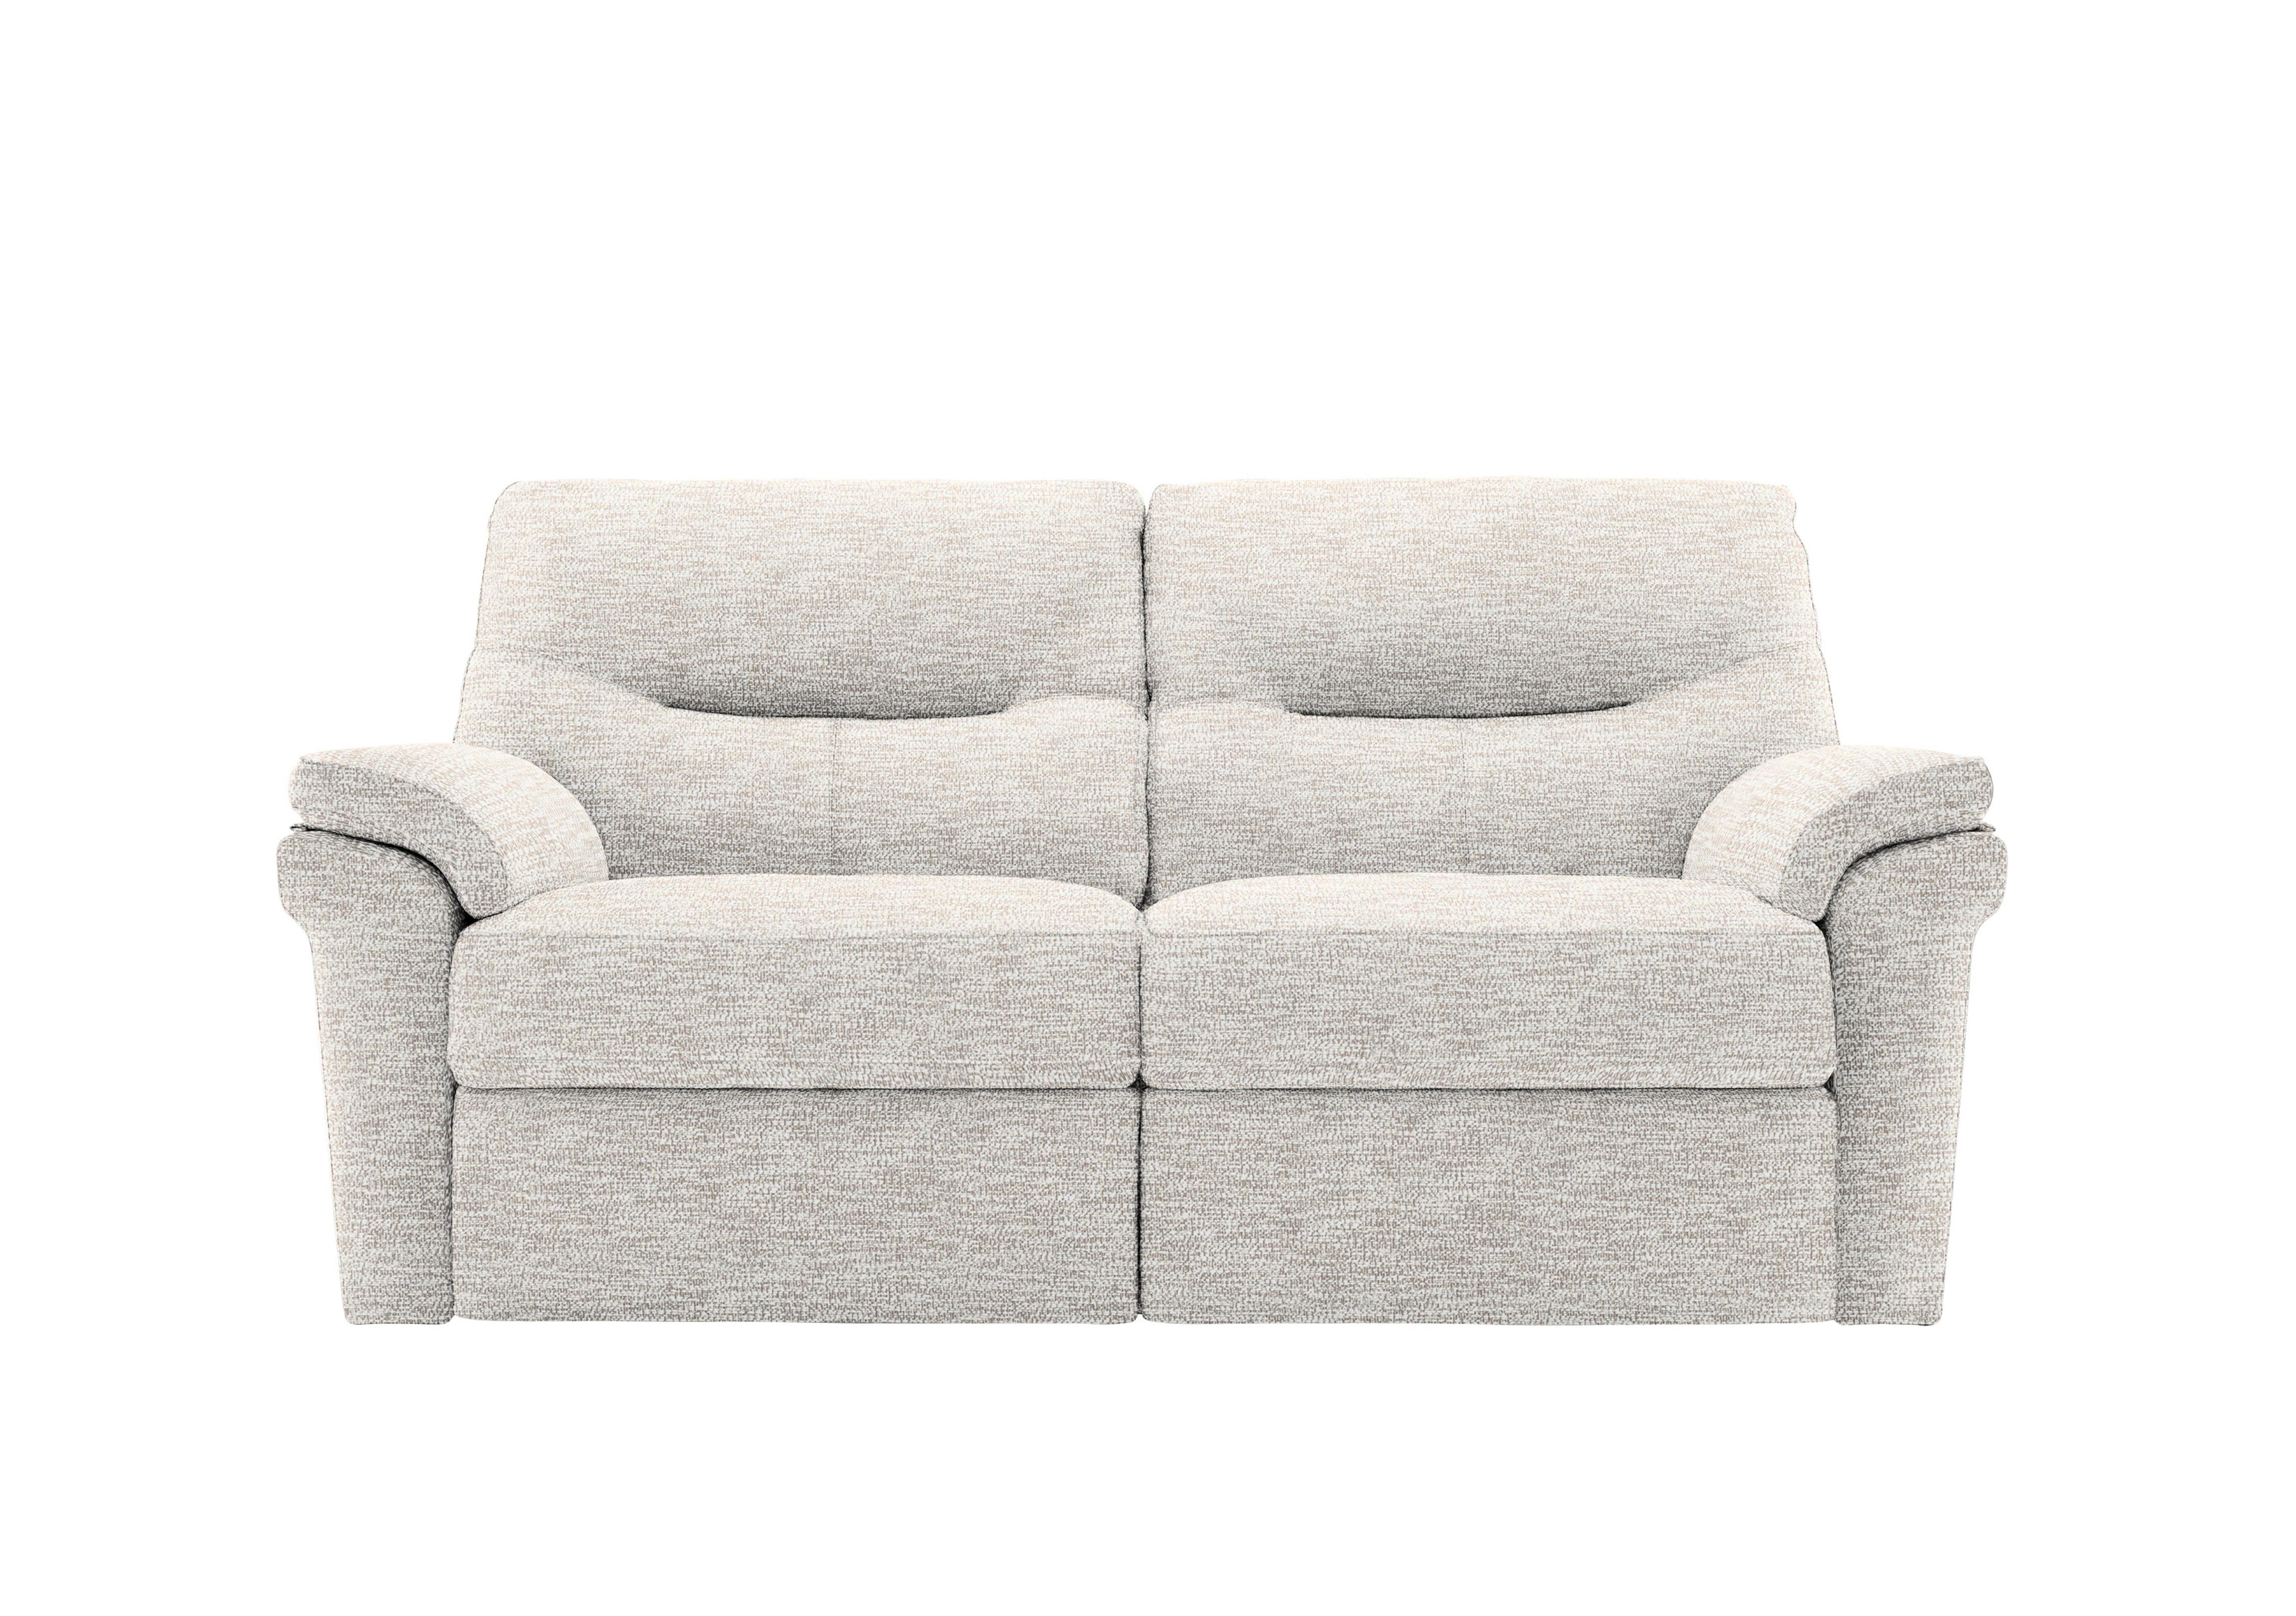 Seattle 2.5 Seater Fabric Sofa in C931 Rush Cream on Furniture Village